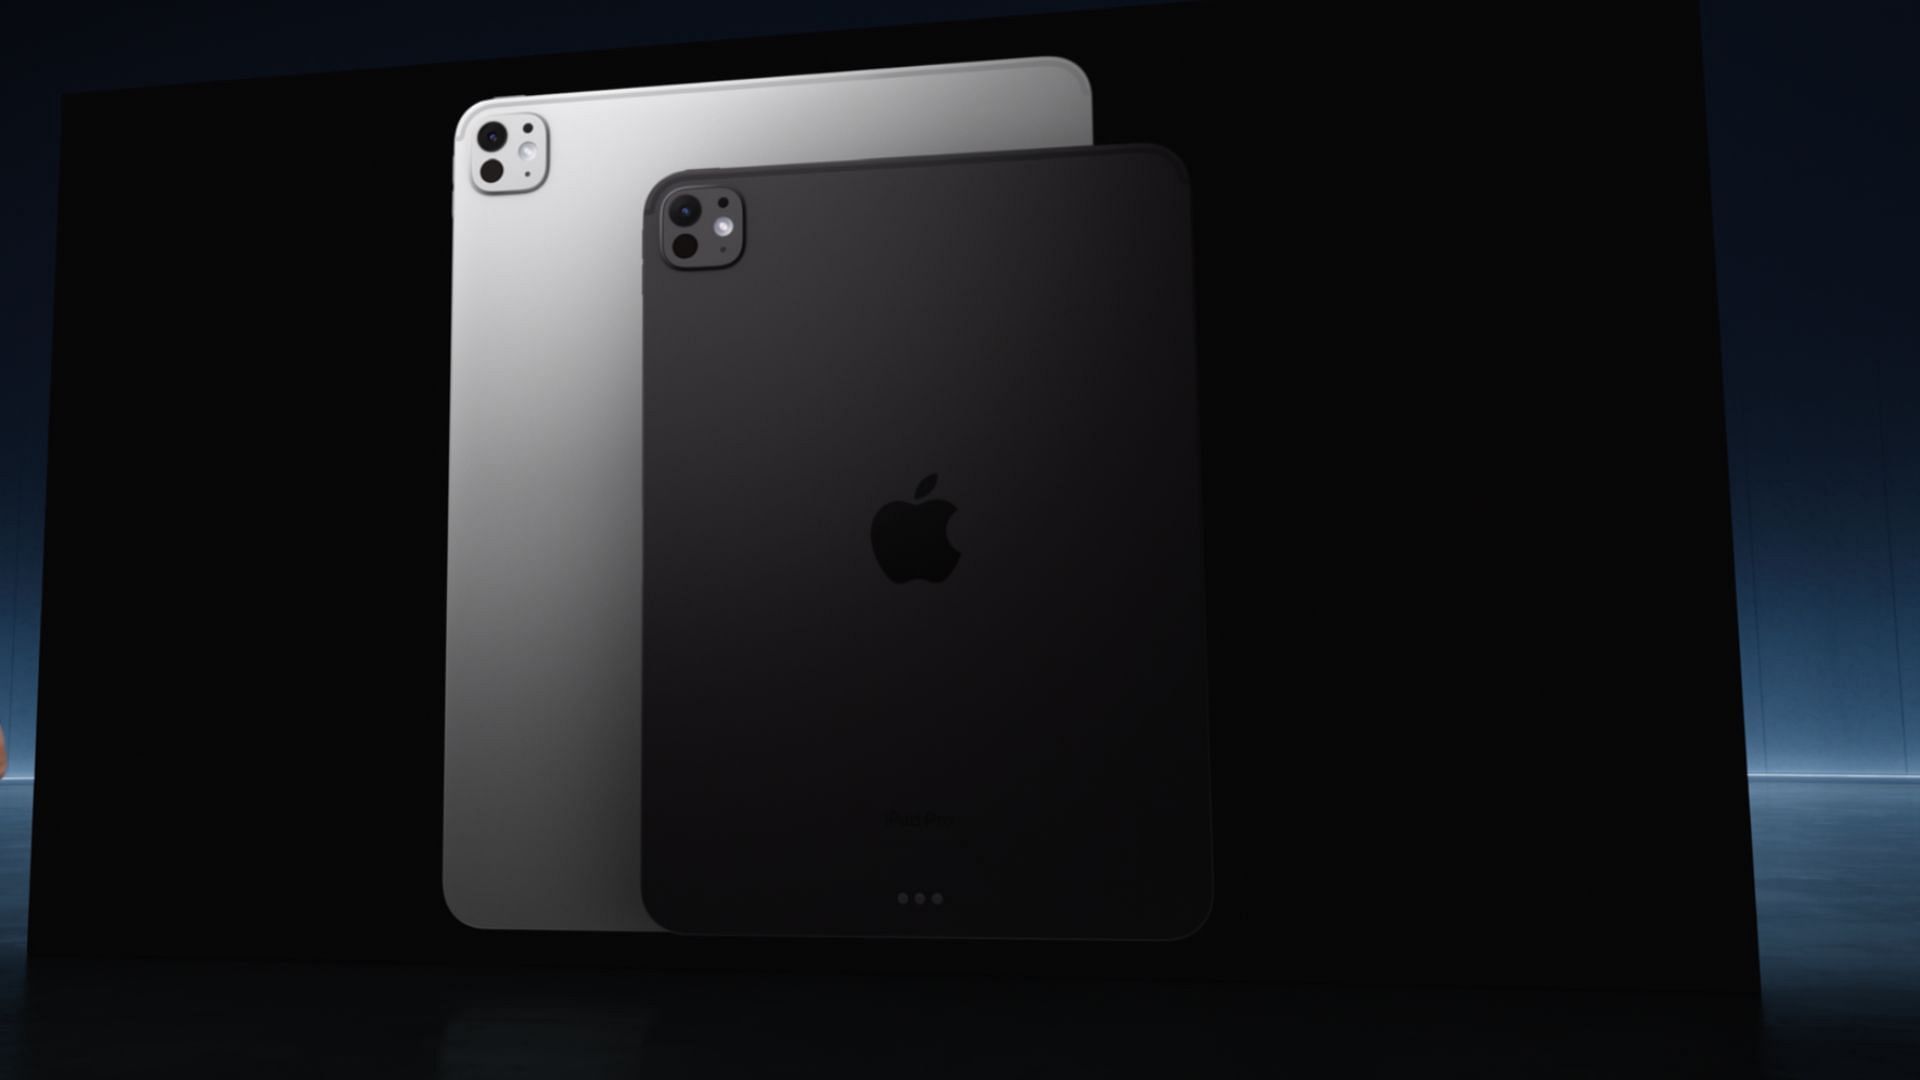 Core configuration of the new iPad (Image via Apple)